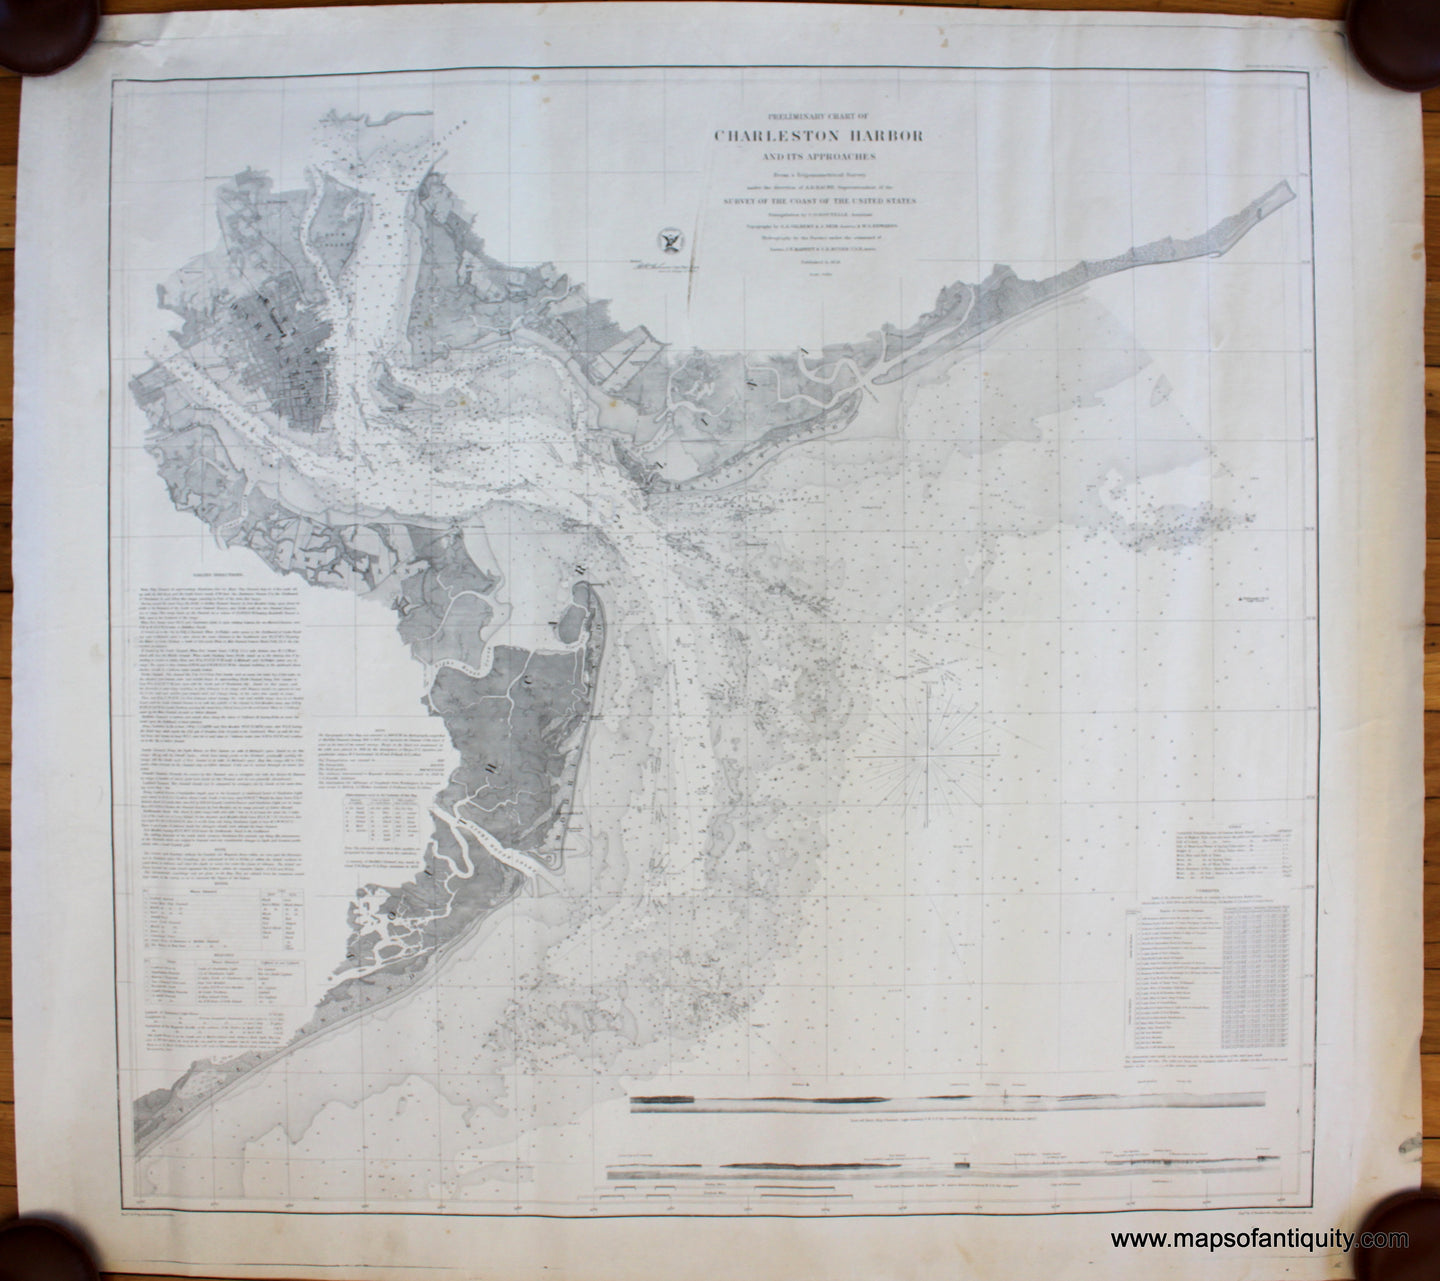 Antique-nautical-chart-restrike-Charleston-Harbor-South-Carolina-USC&GS-20th-Century-Maps-of-Antiquity